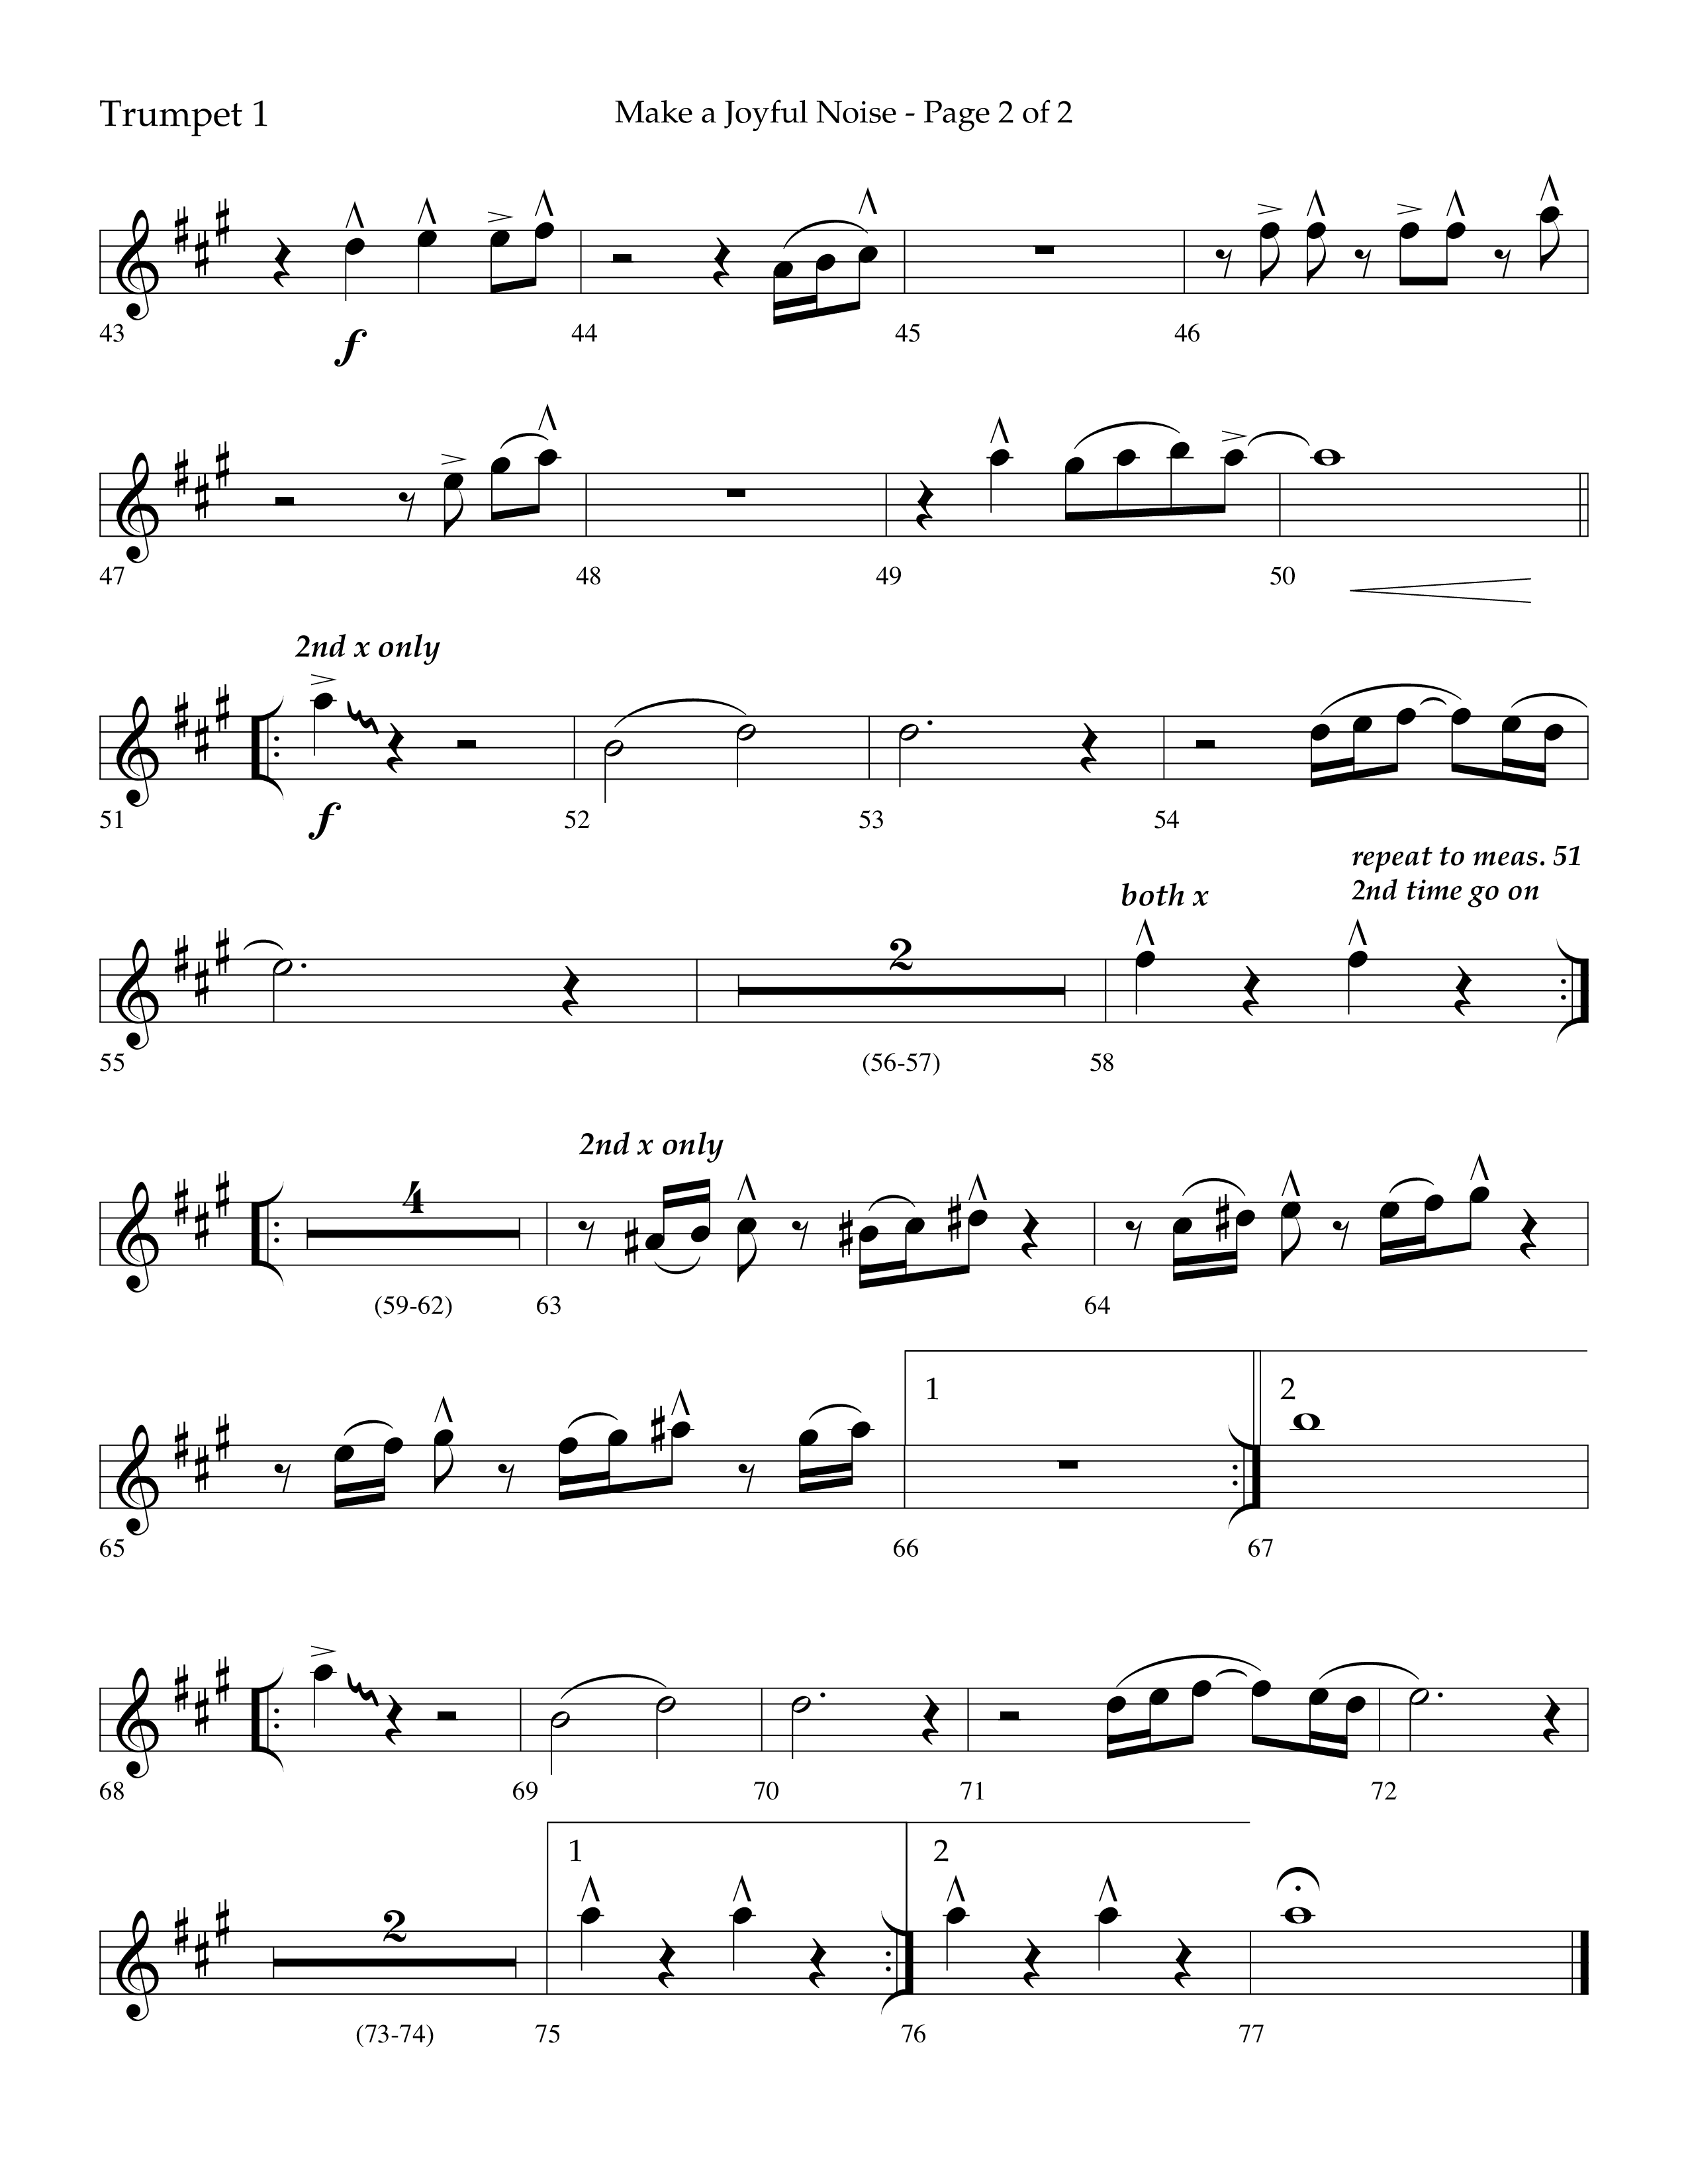 Make A Joyful Noise (Choral Anthem SATB) Trumpet 1 (Lifeway Choral / Arr. David Wise / Orch. Daniel Semsen)